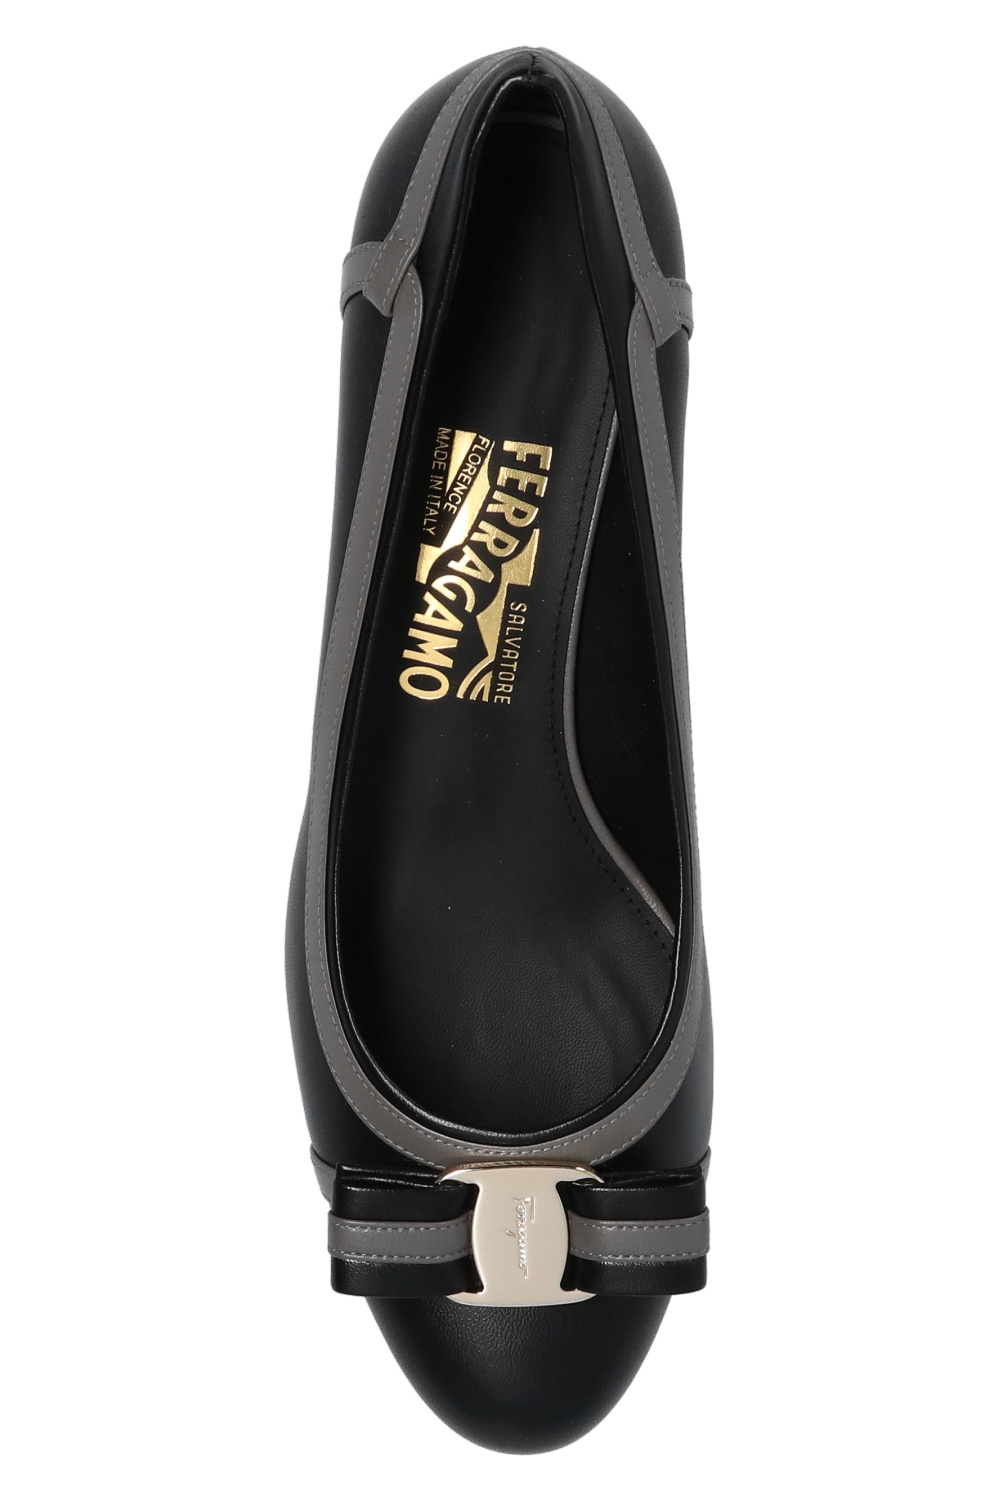 Salvatore Ferragamo 'Vara' heeled pumps | Women's Shoes | Vitkac